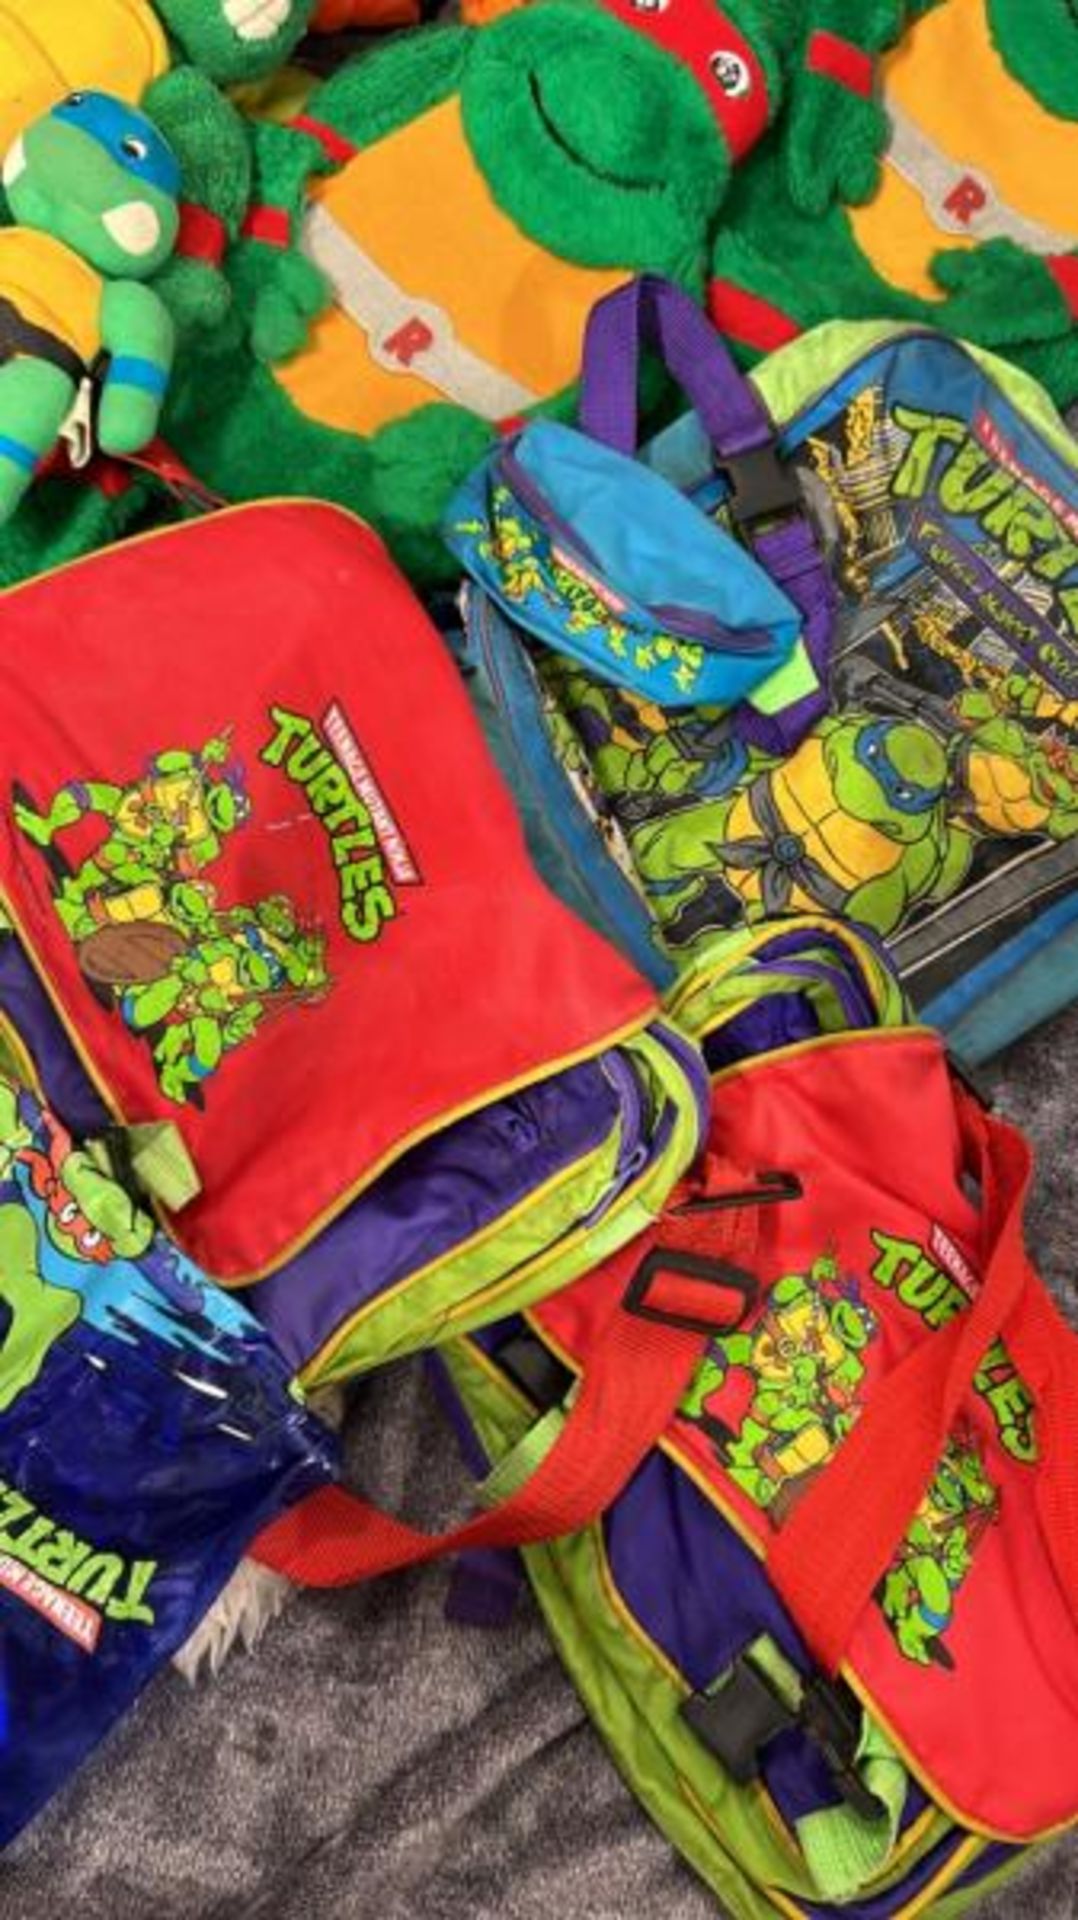 Teenage Mutant Hero Turtles soft toys, rug, rucksacks, bags and hot water bottles / AN41 - Image 4 of 8